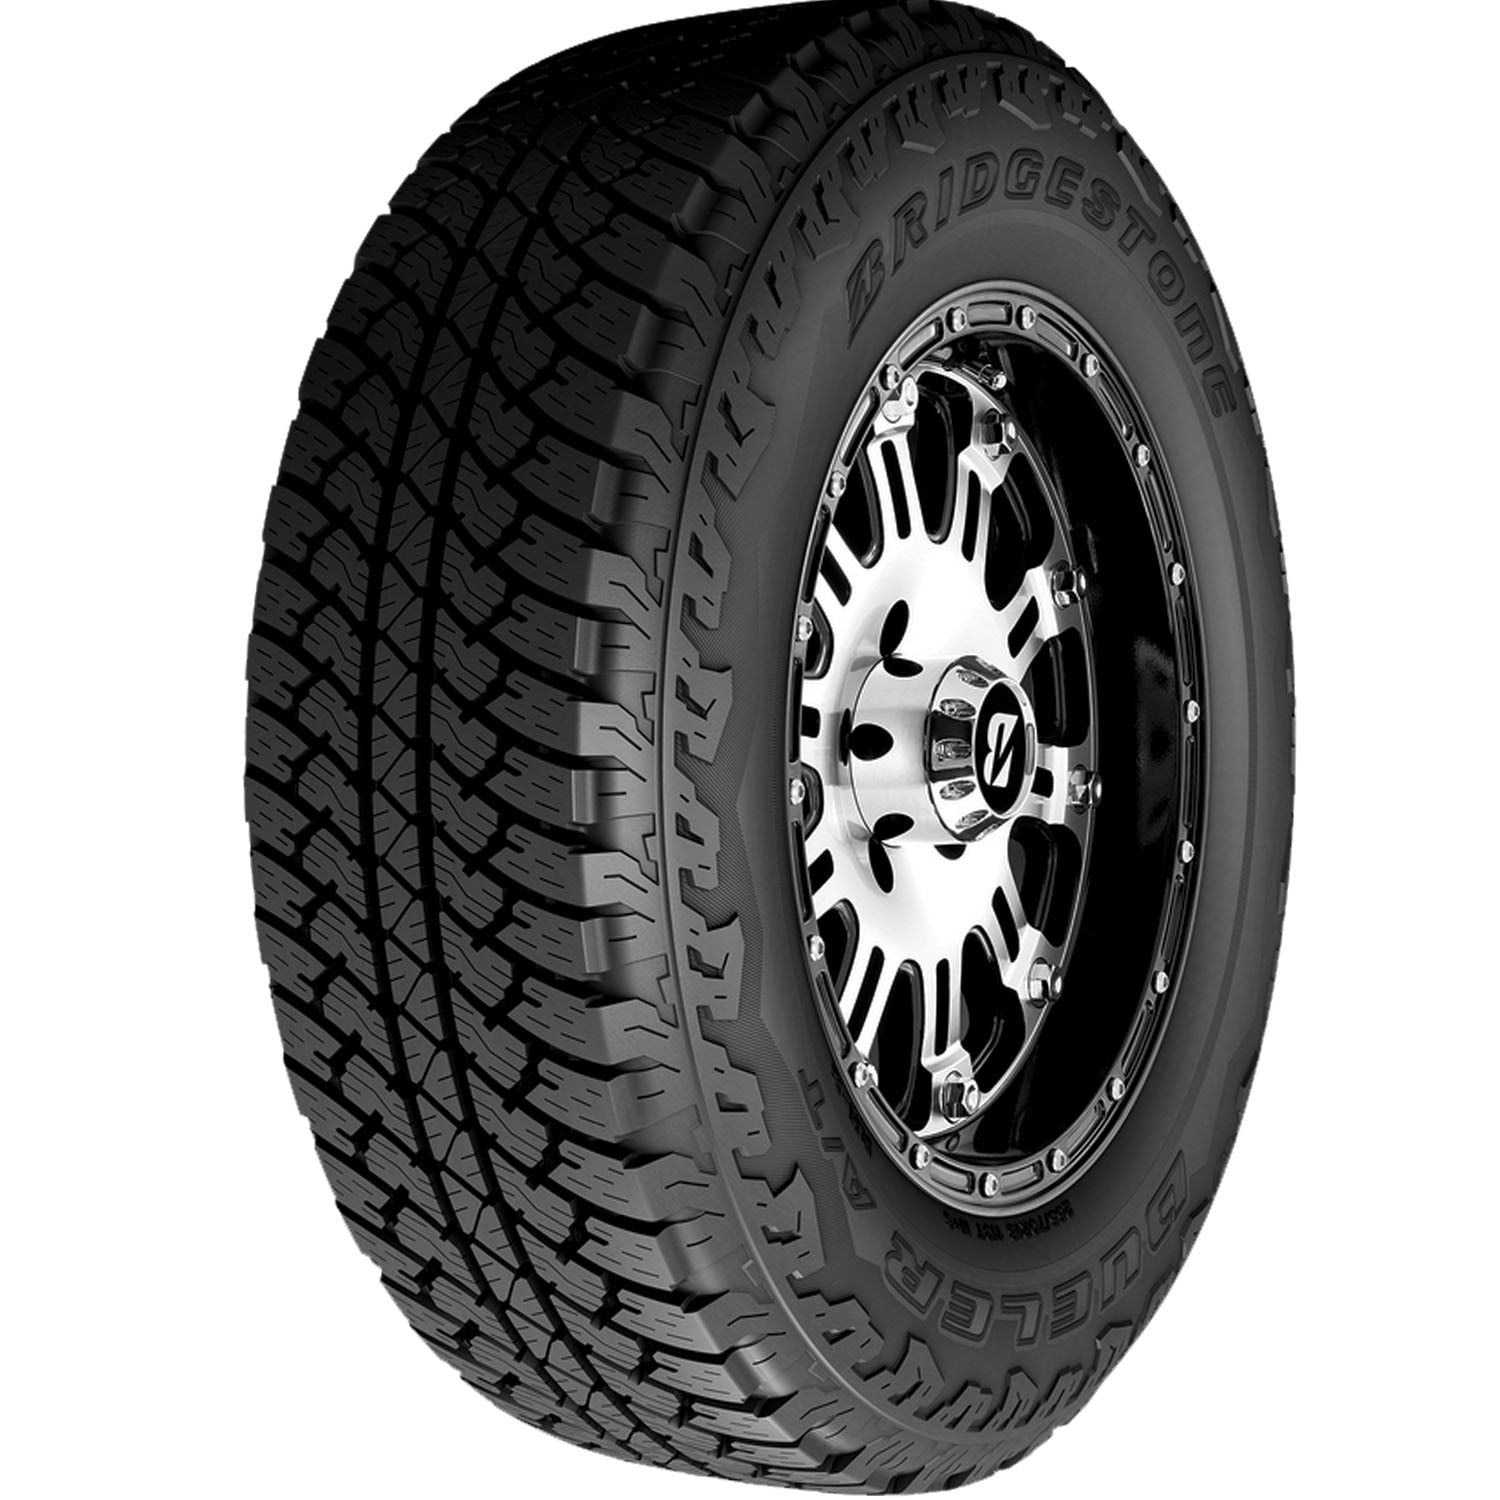 Bridgestone Alenza A/S Ultra 275/45R20 110W XL Tire